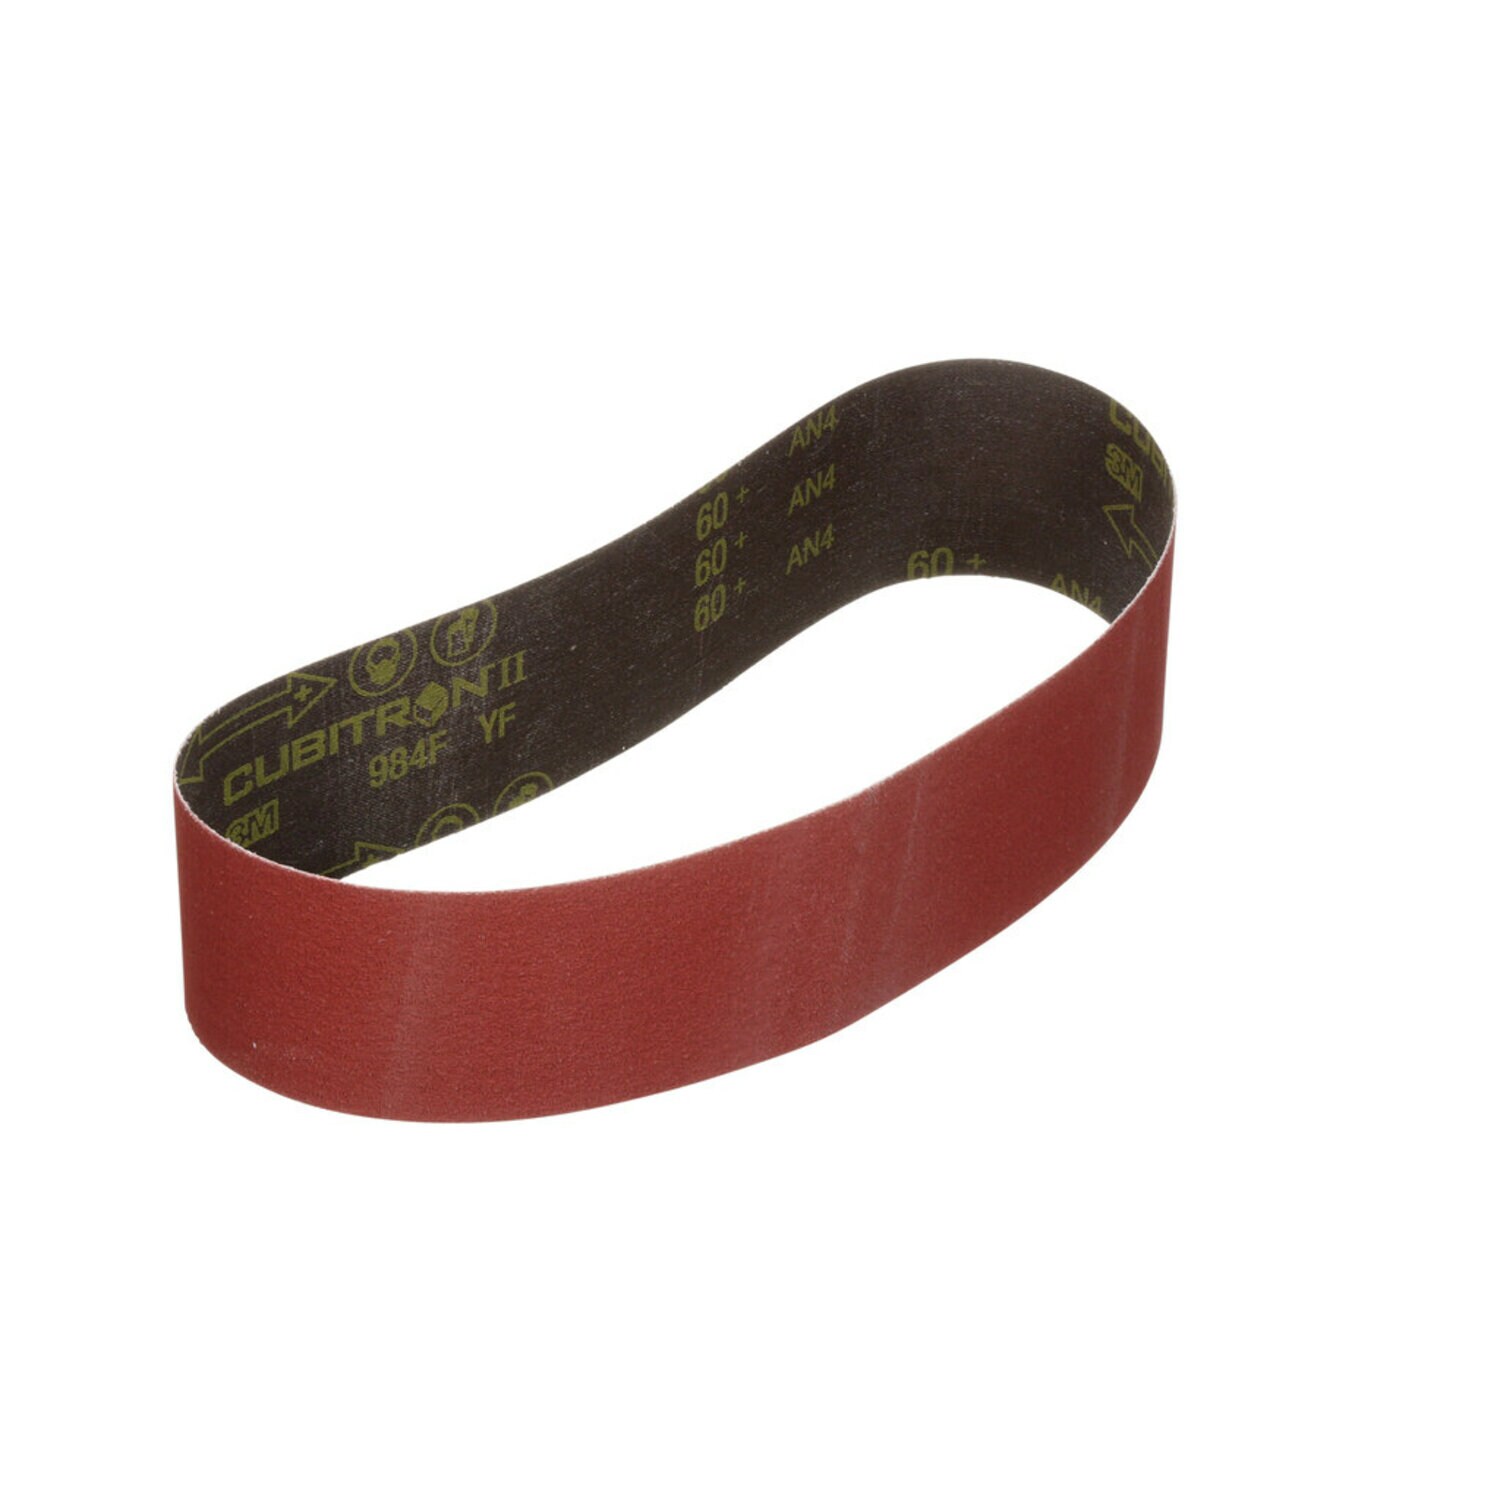 7010513880 - 3M Cubitron II Cloth Belt 984F, 80+ YF-weight, 3 in x 60 in, Film-lok,
Single-flex